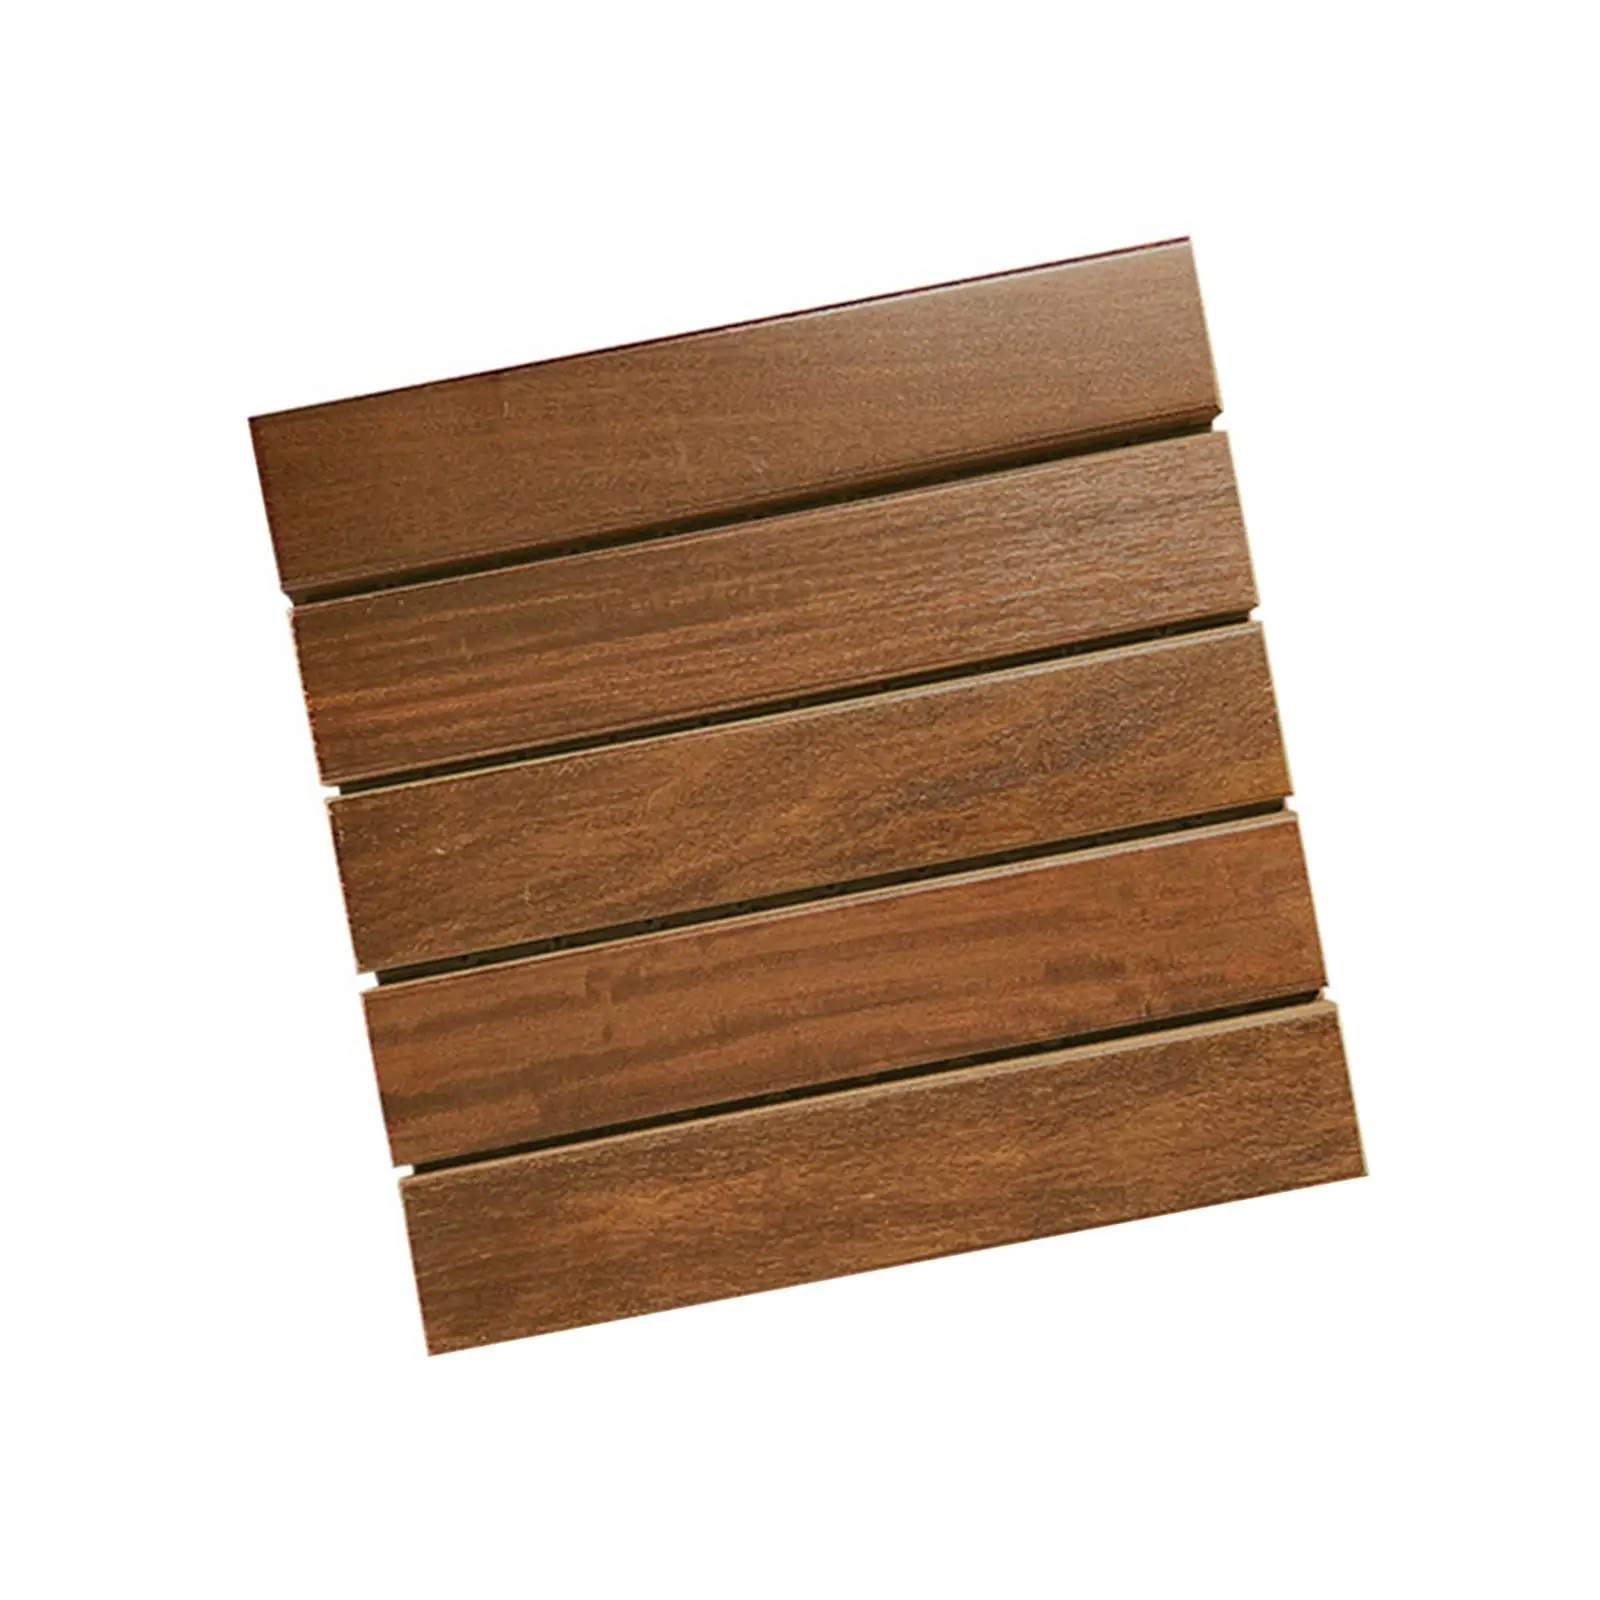 Wooden Flooring Interlocking Portable Waterproof Wear Resistant Interlocking Deck Tiles for Porch Patio Home Pathway Garage